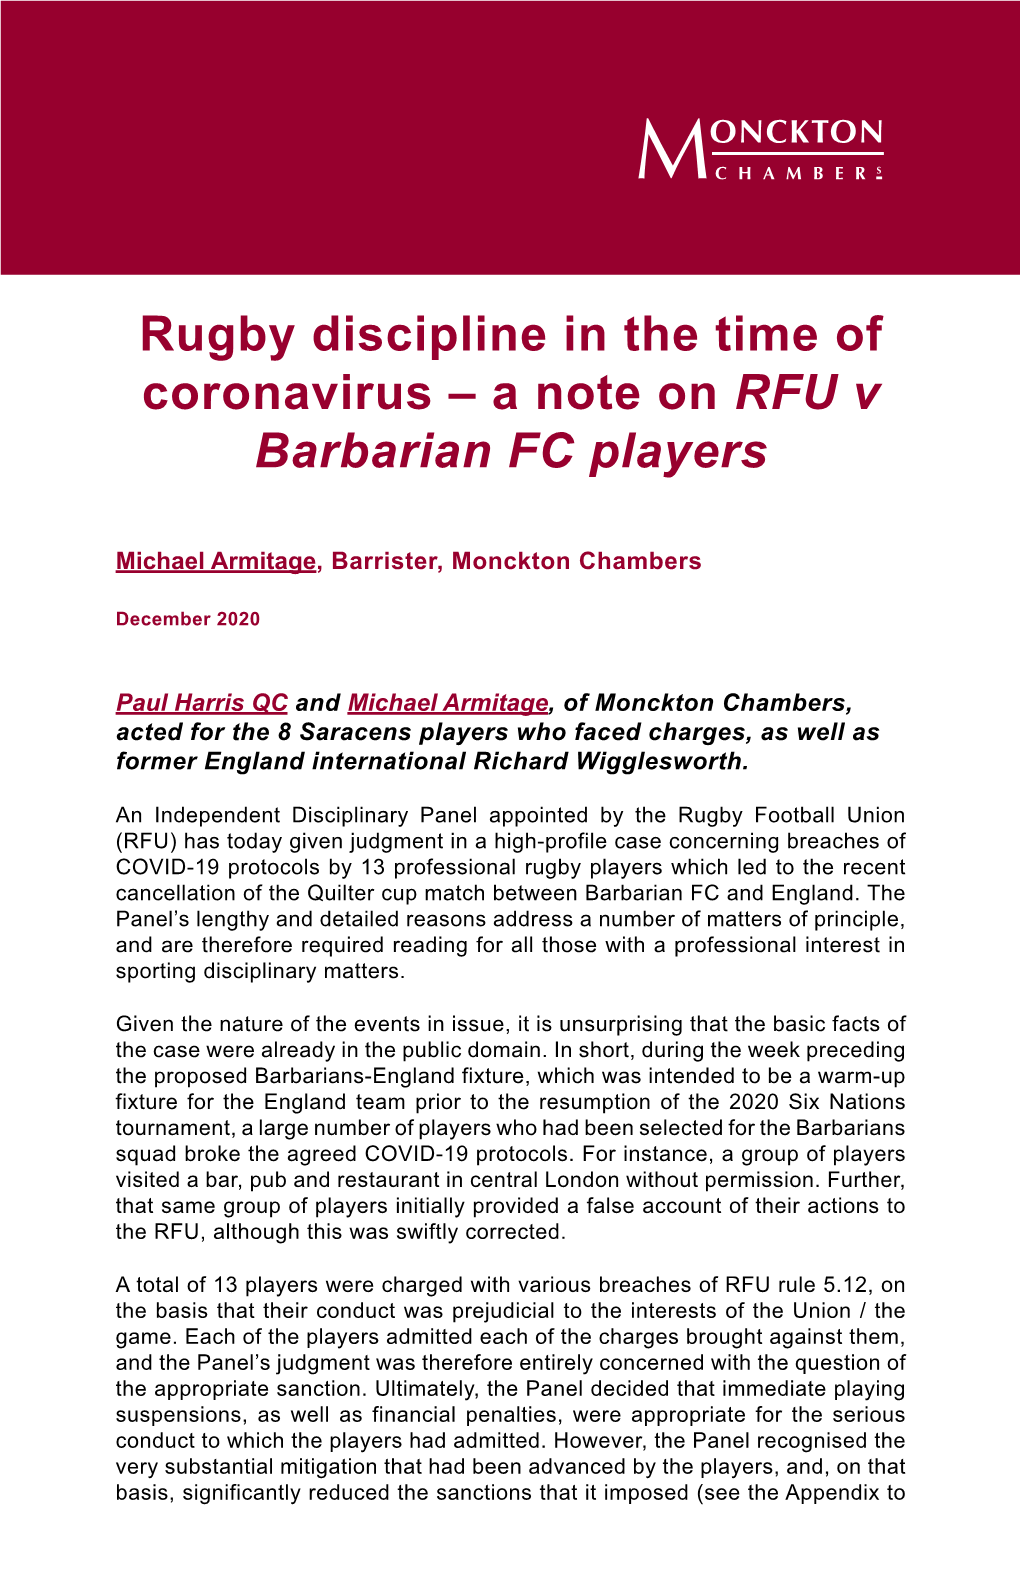 A Note on RFU V Barbarian FC Players